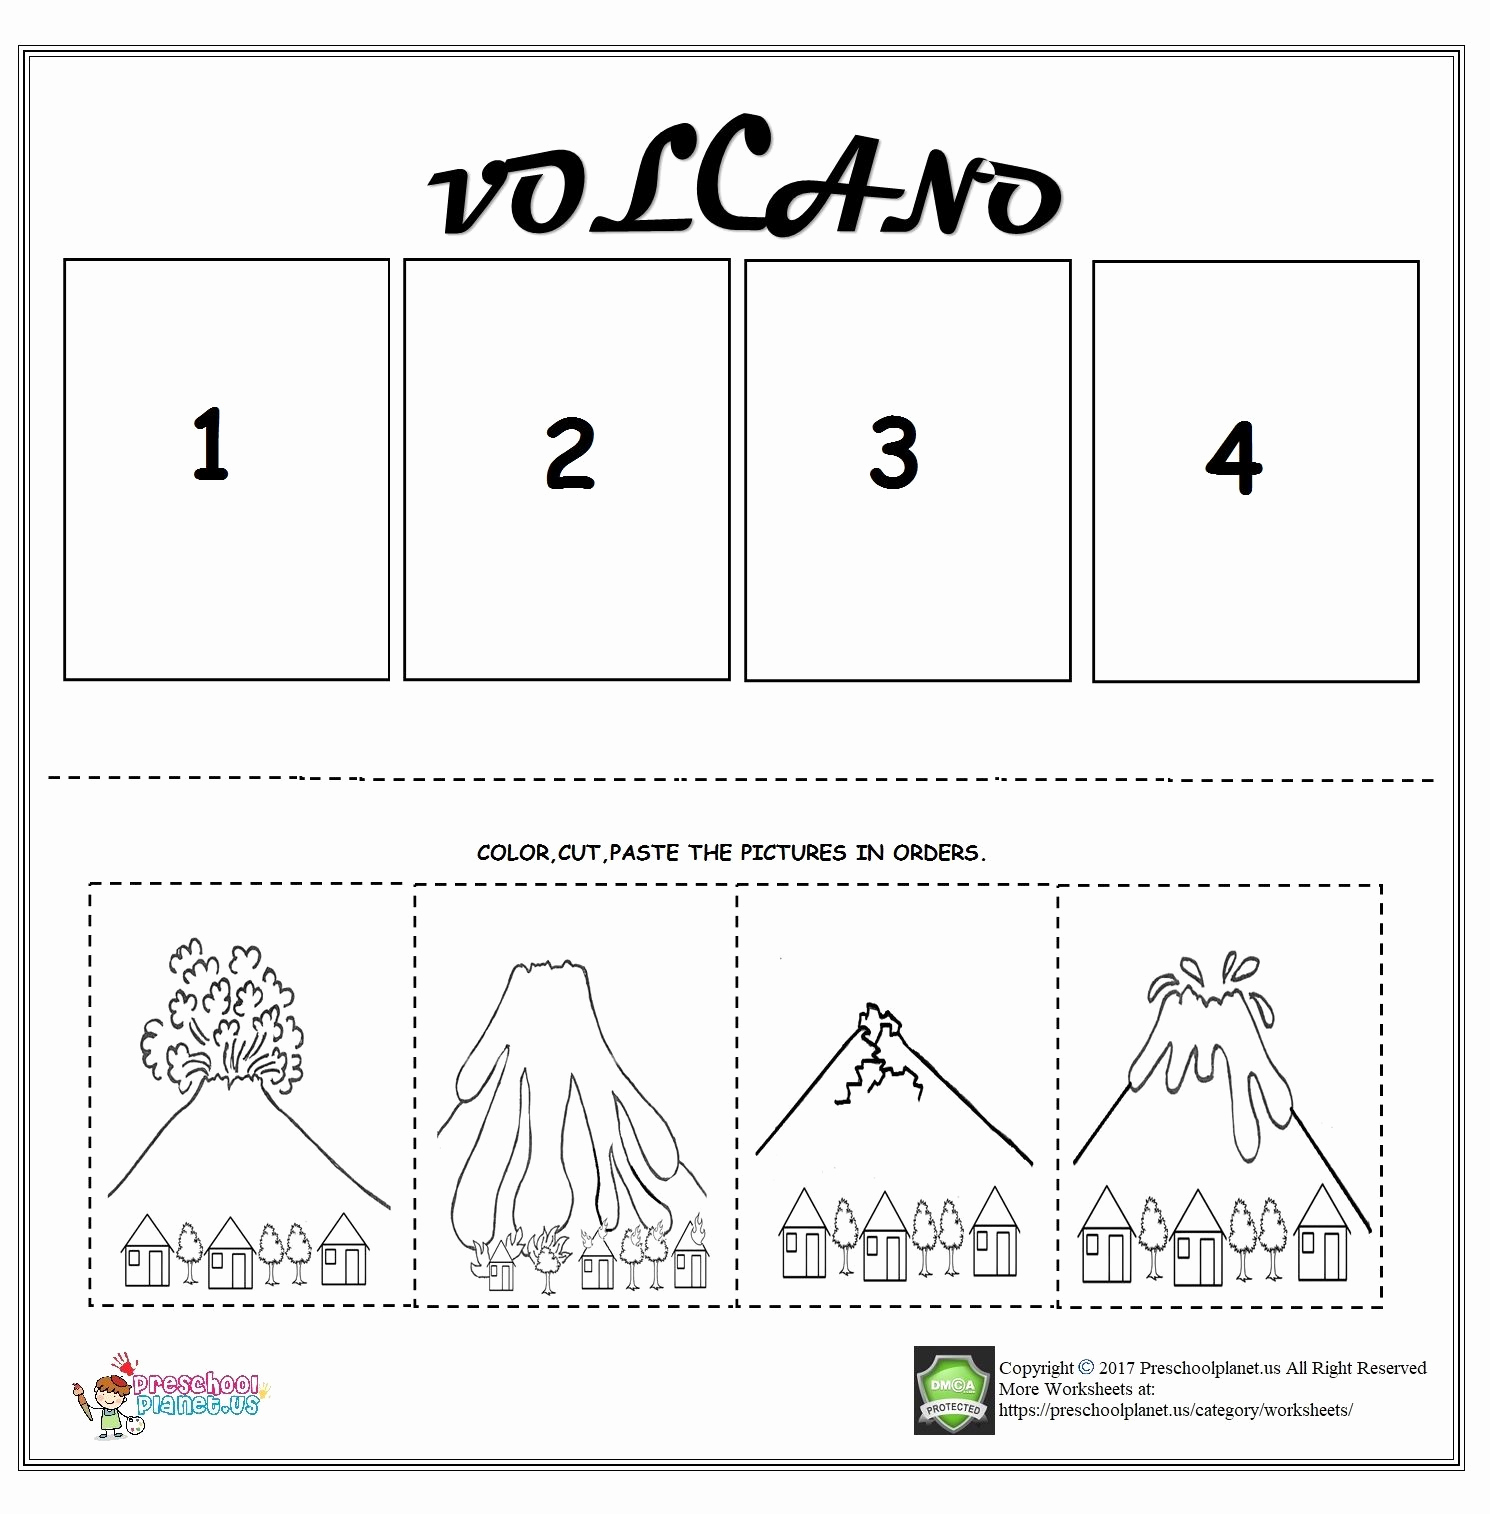 Volcano Worksheet for Kids New Volcano Sequencing Worksheet for Kids